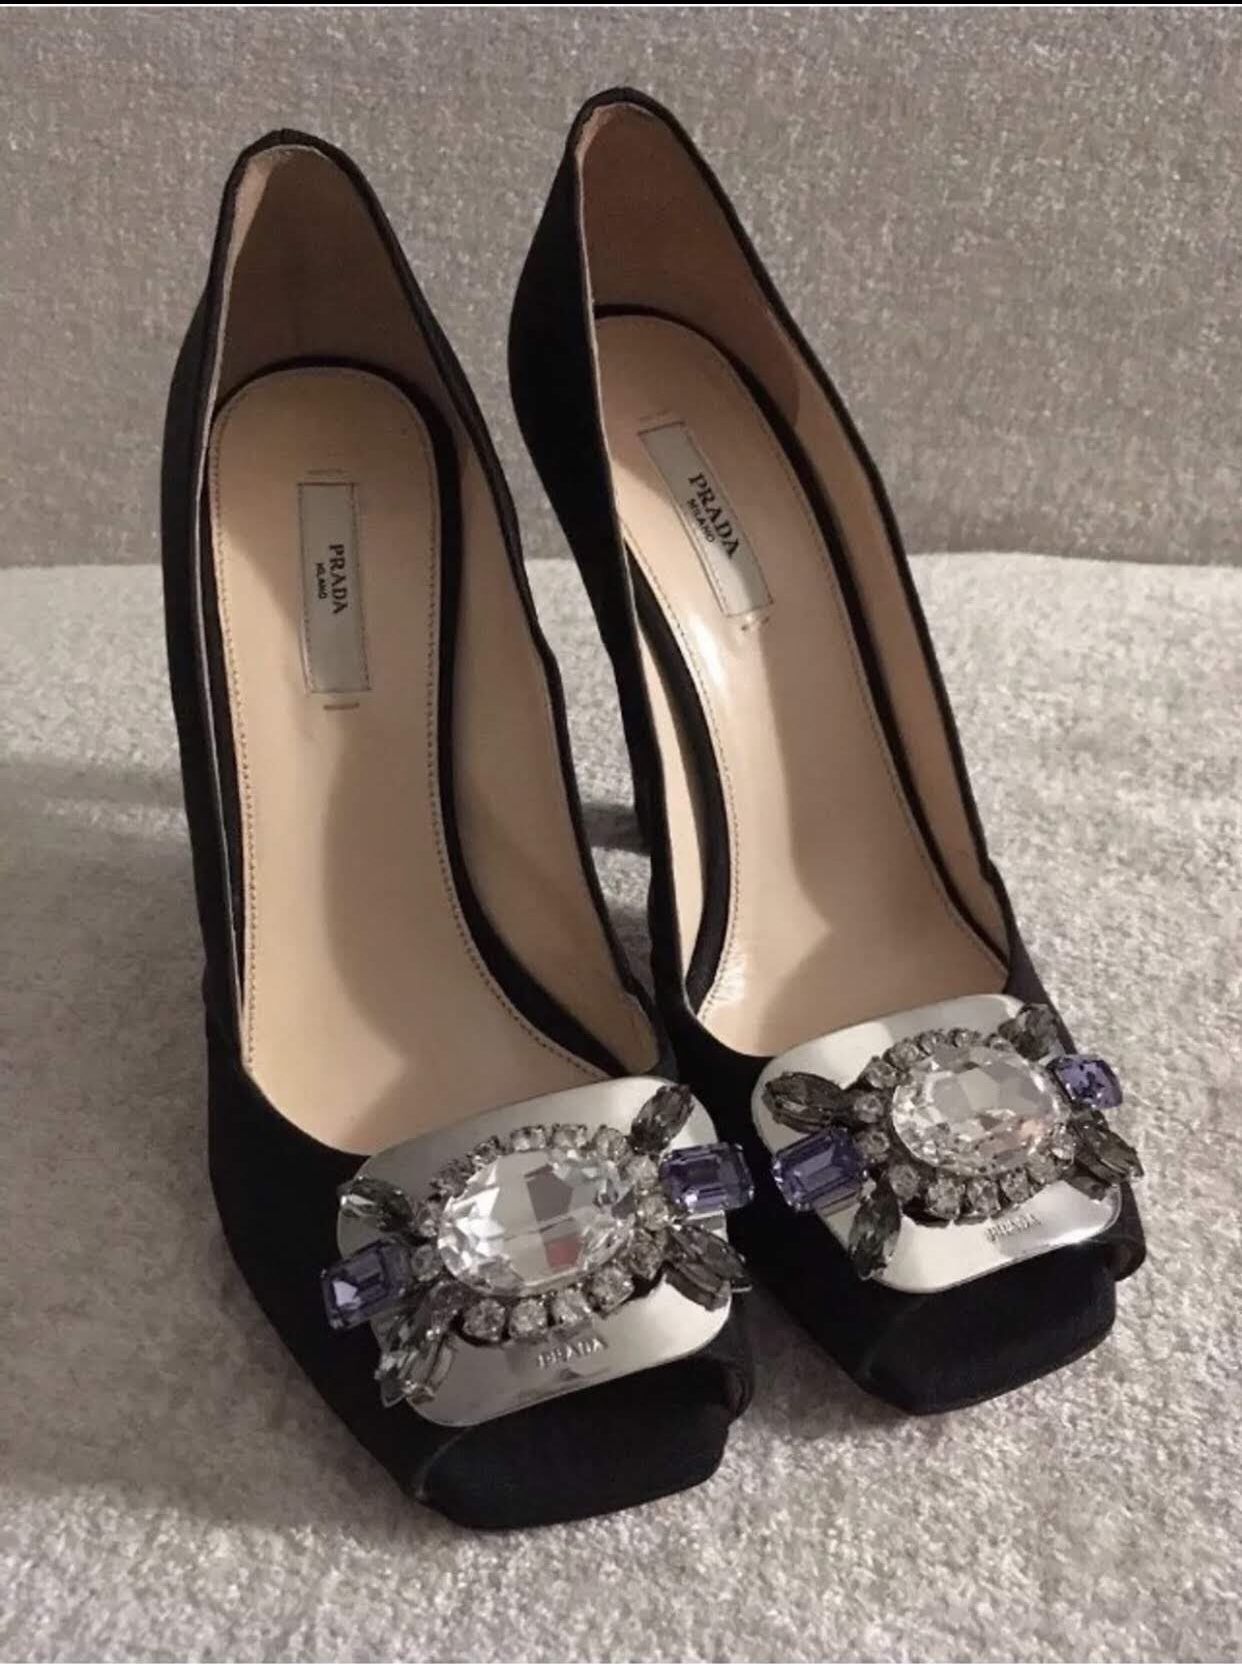 Authentic Prada heels